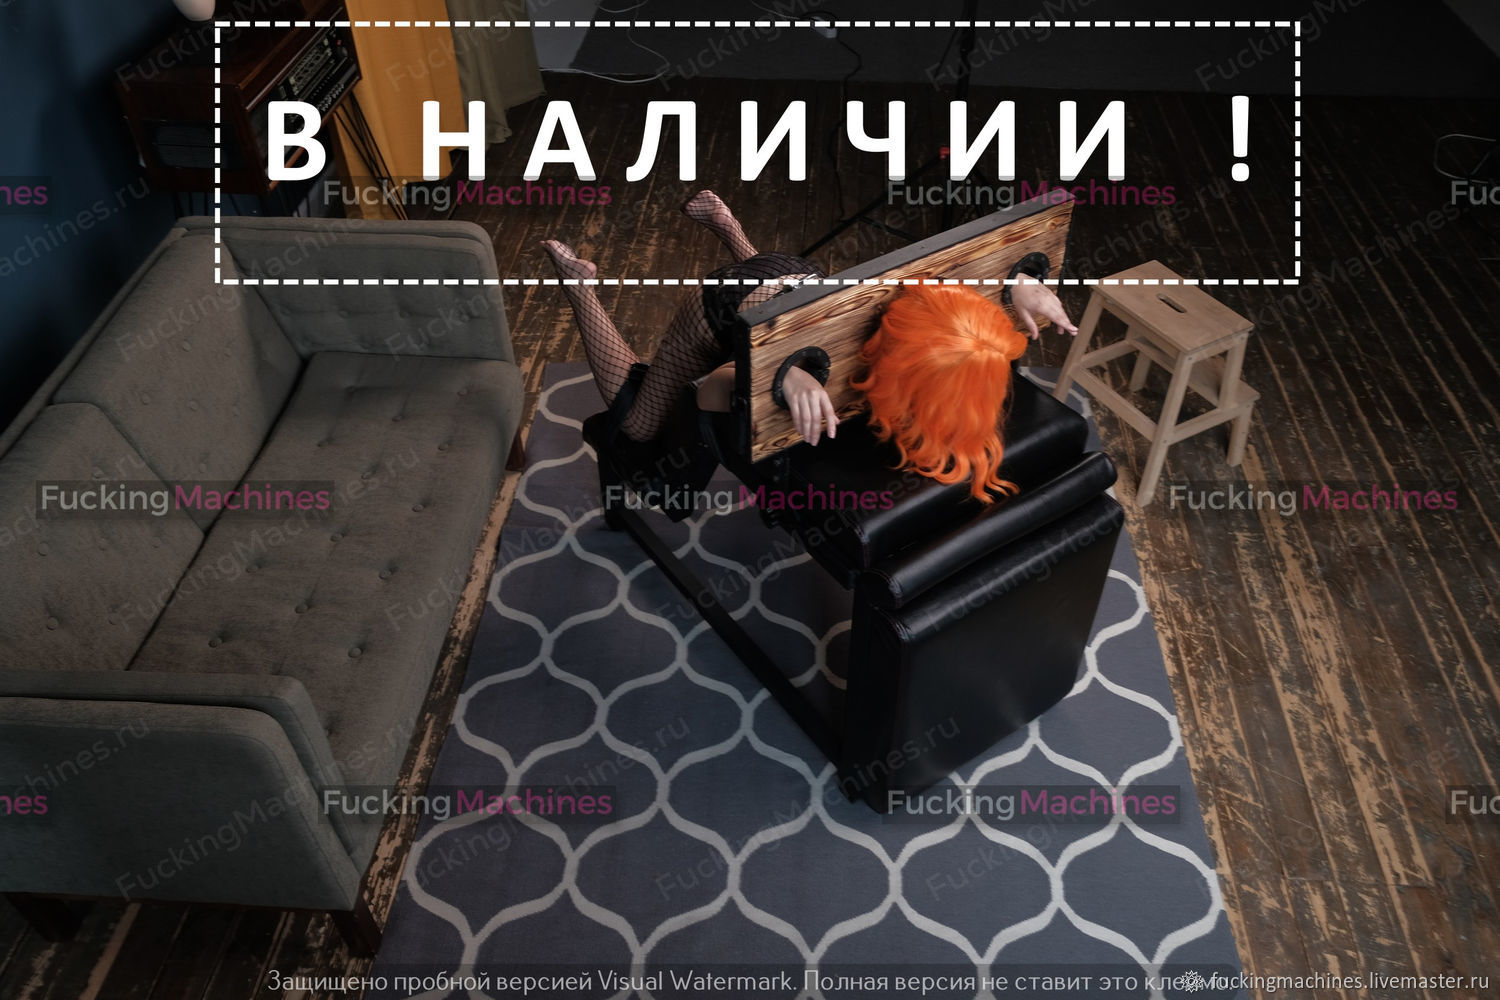 The Sims 4 Порно Видео | altaifish.ru